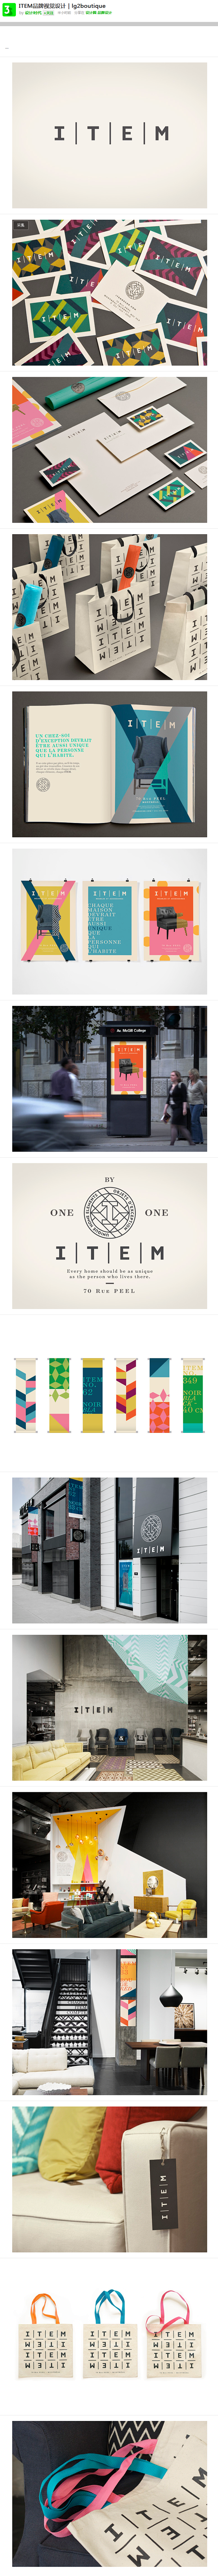 ITEM品牌视觉设计 | lg2bout...